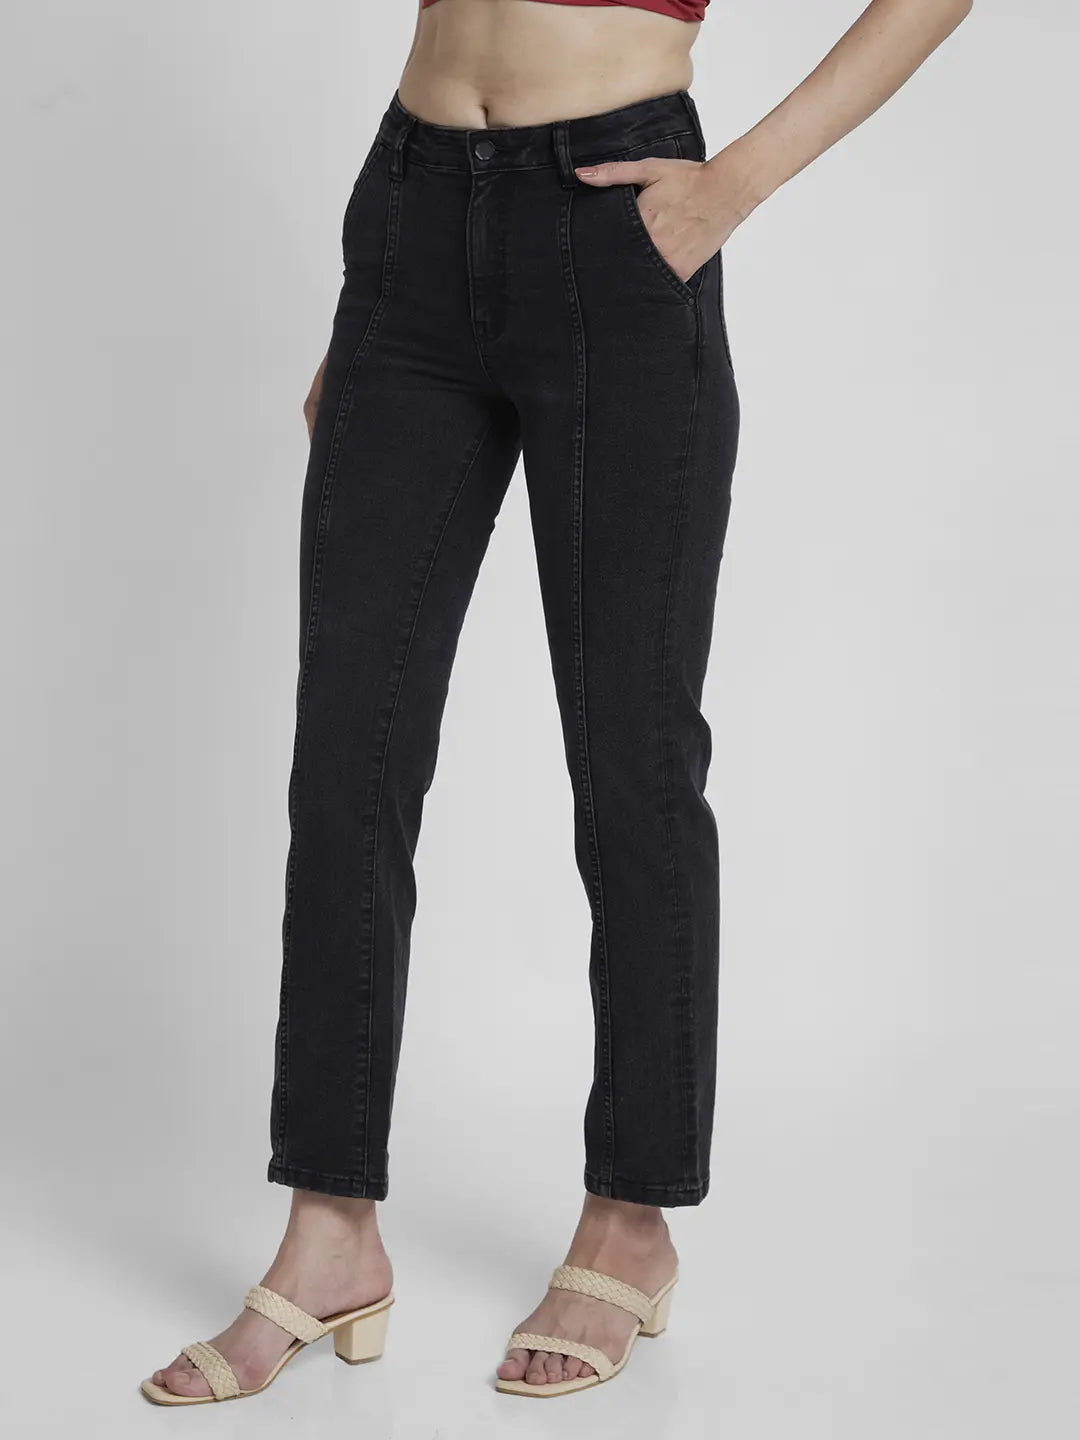 Spykar Women Black Lycra Slim Straigth Fit Ankle Length Clean Look Jeans -(Emma)